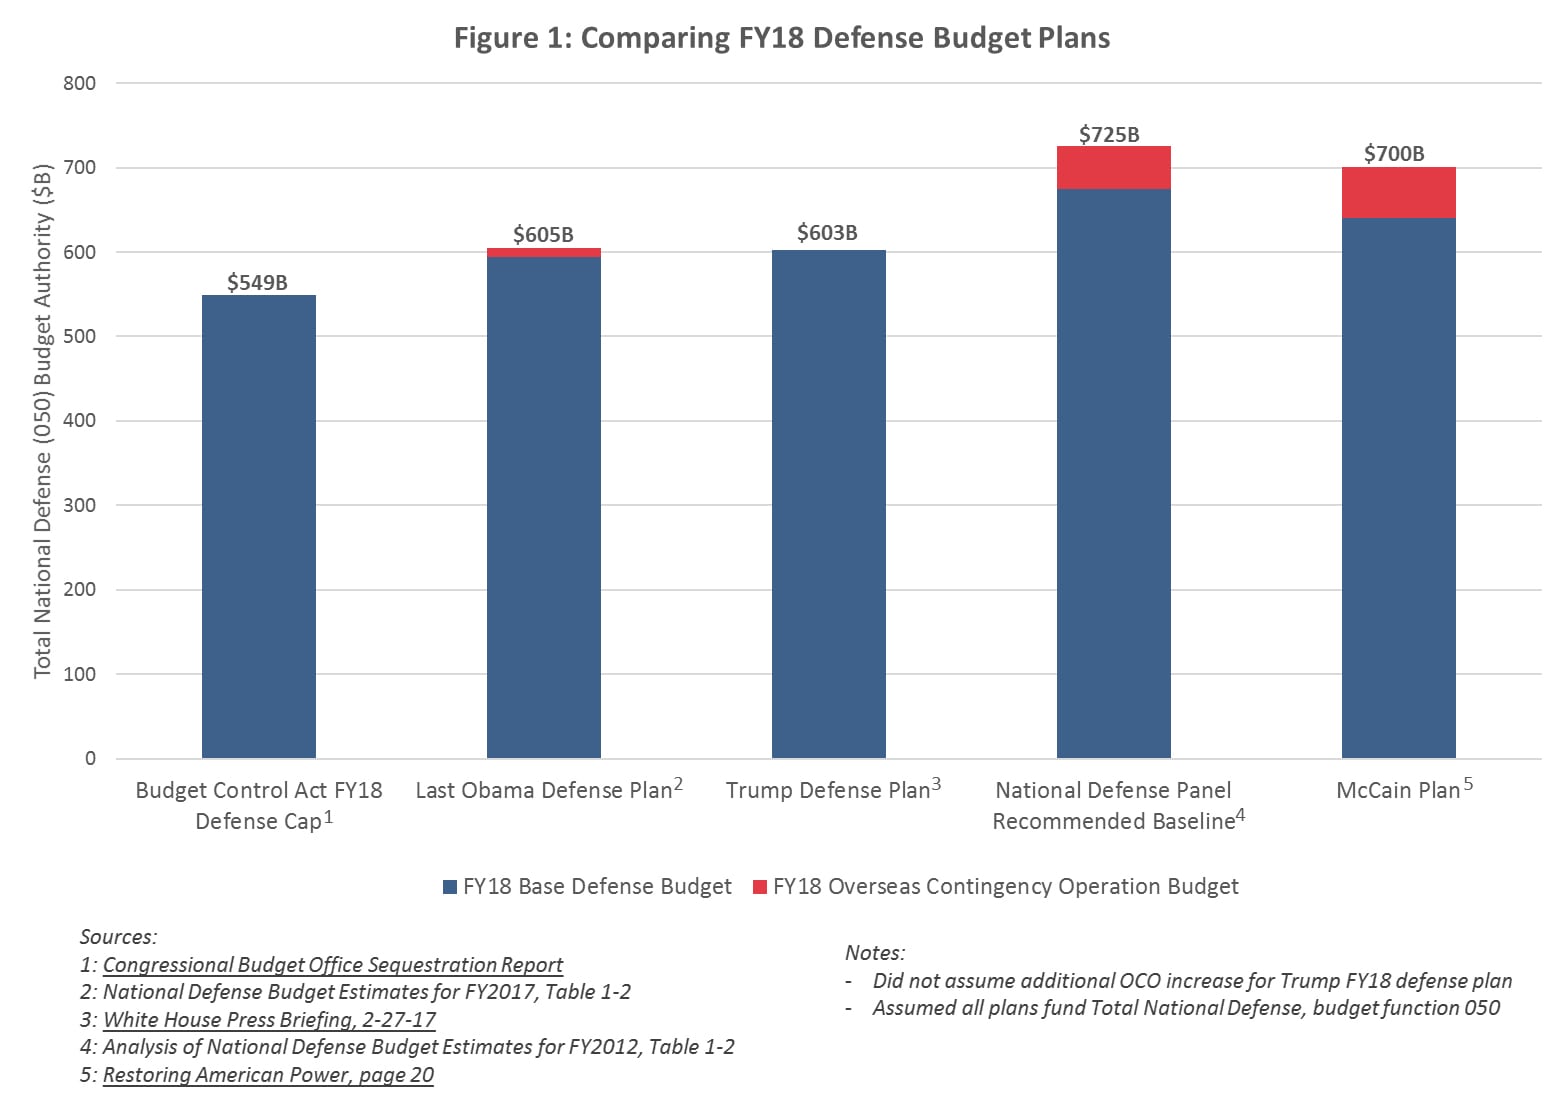 Comparing FY2018 Defense Budget Plans